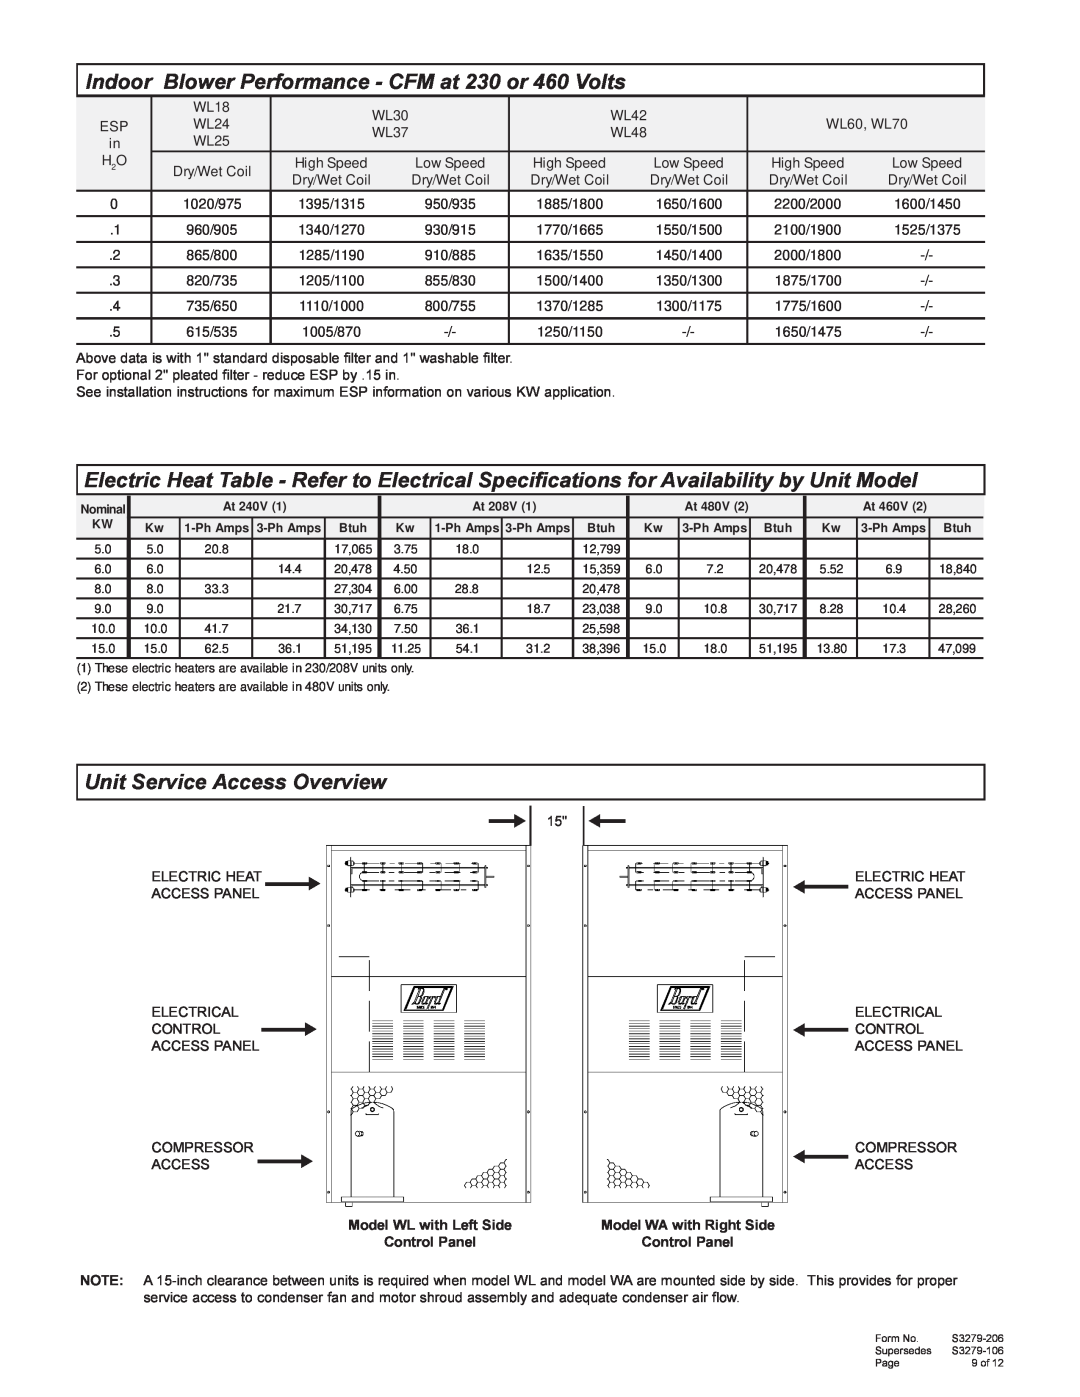 Bard 357-93-E manual Unit Service Access Overview 